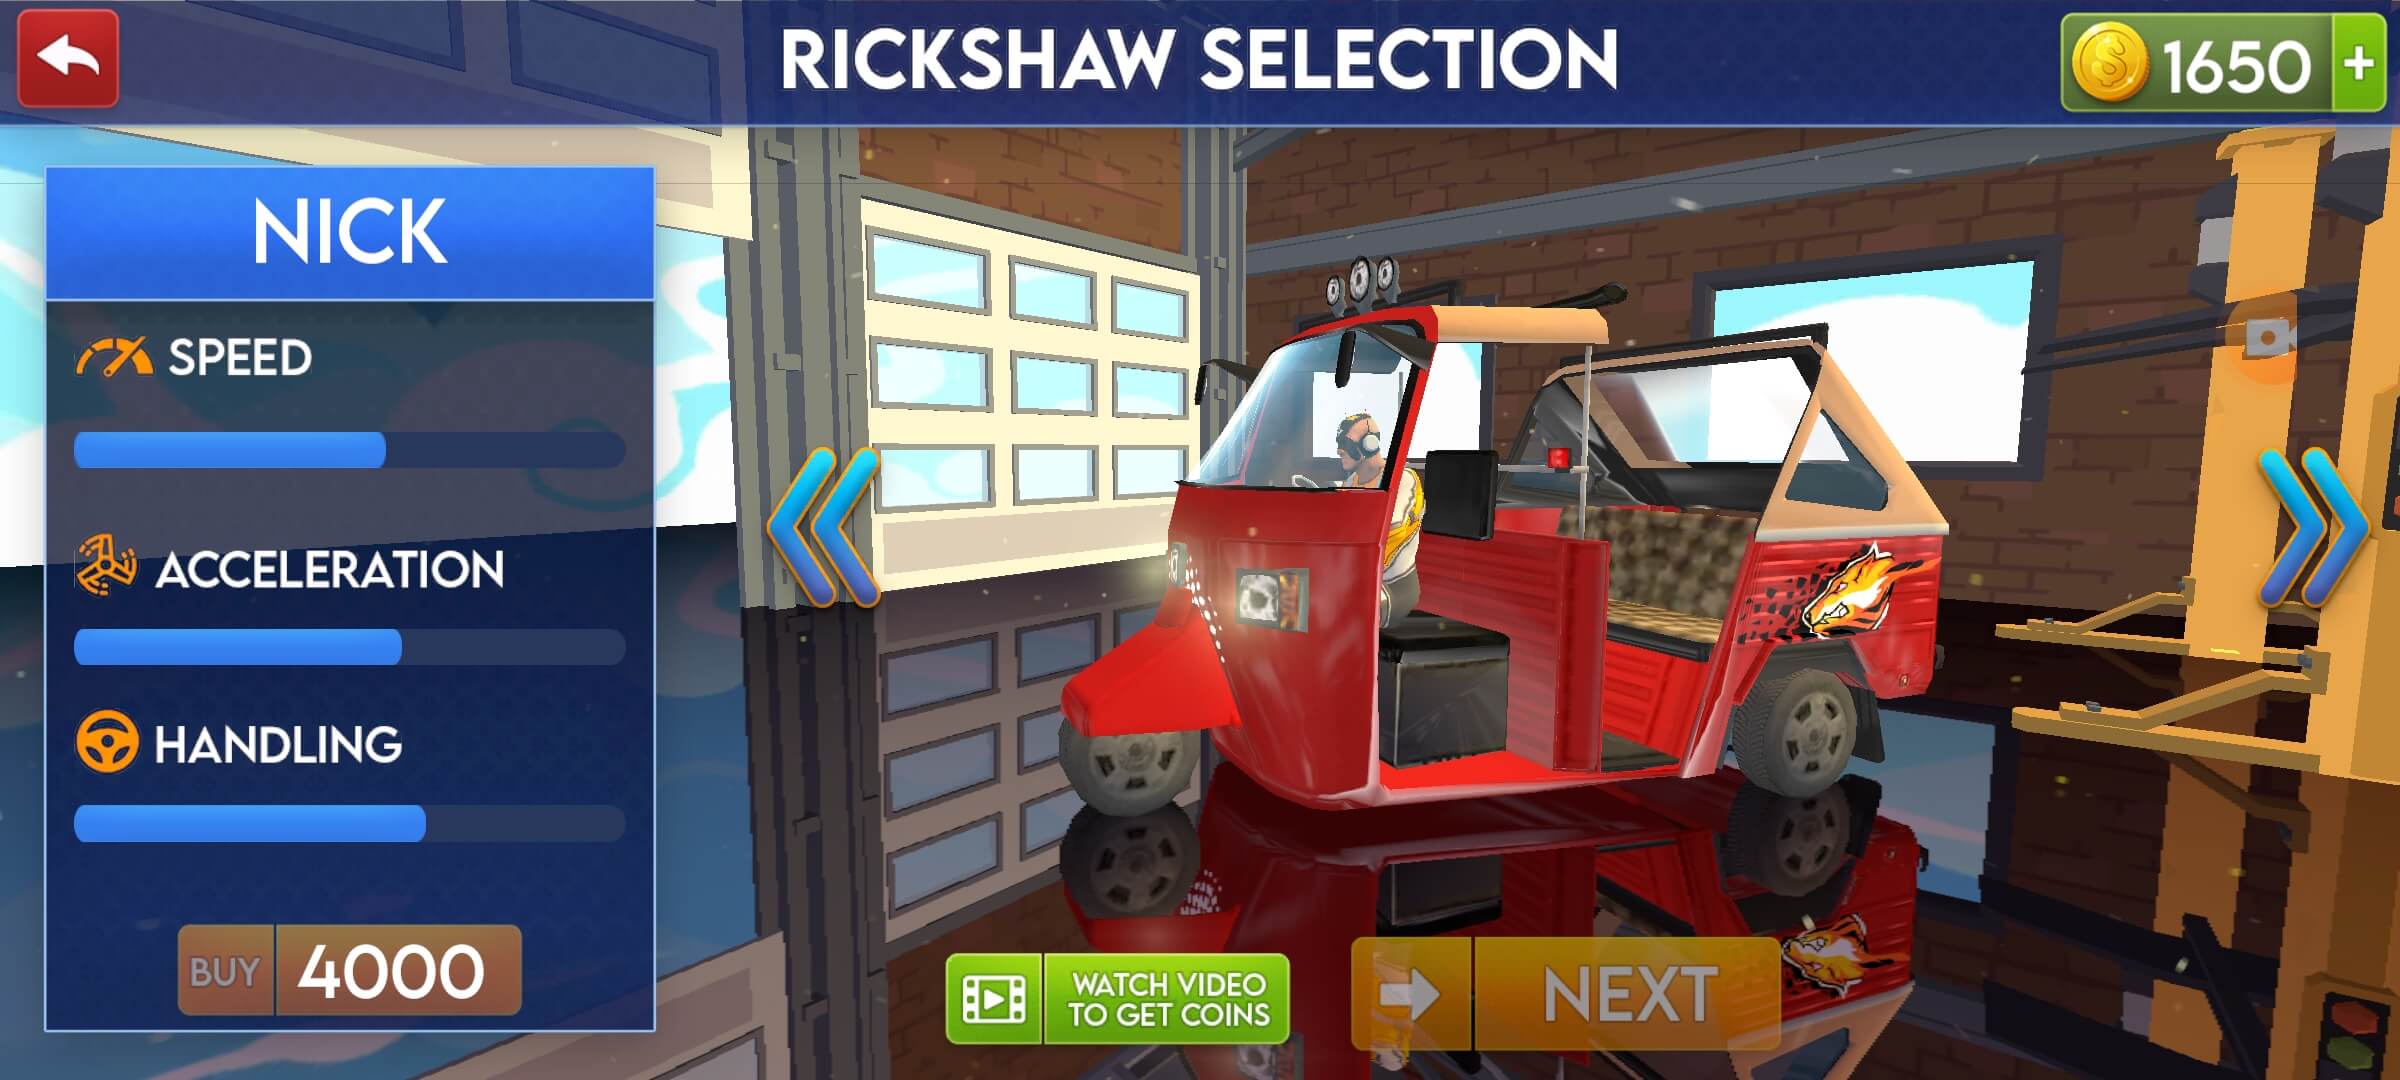 Tuk Tuk Rickshaw Taxi 3D